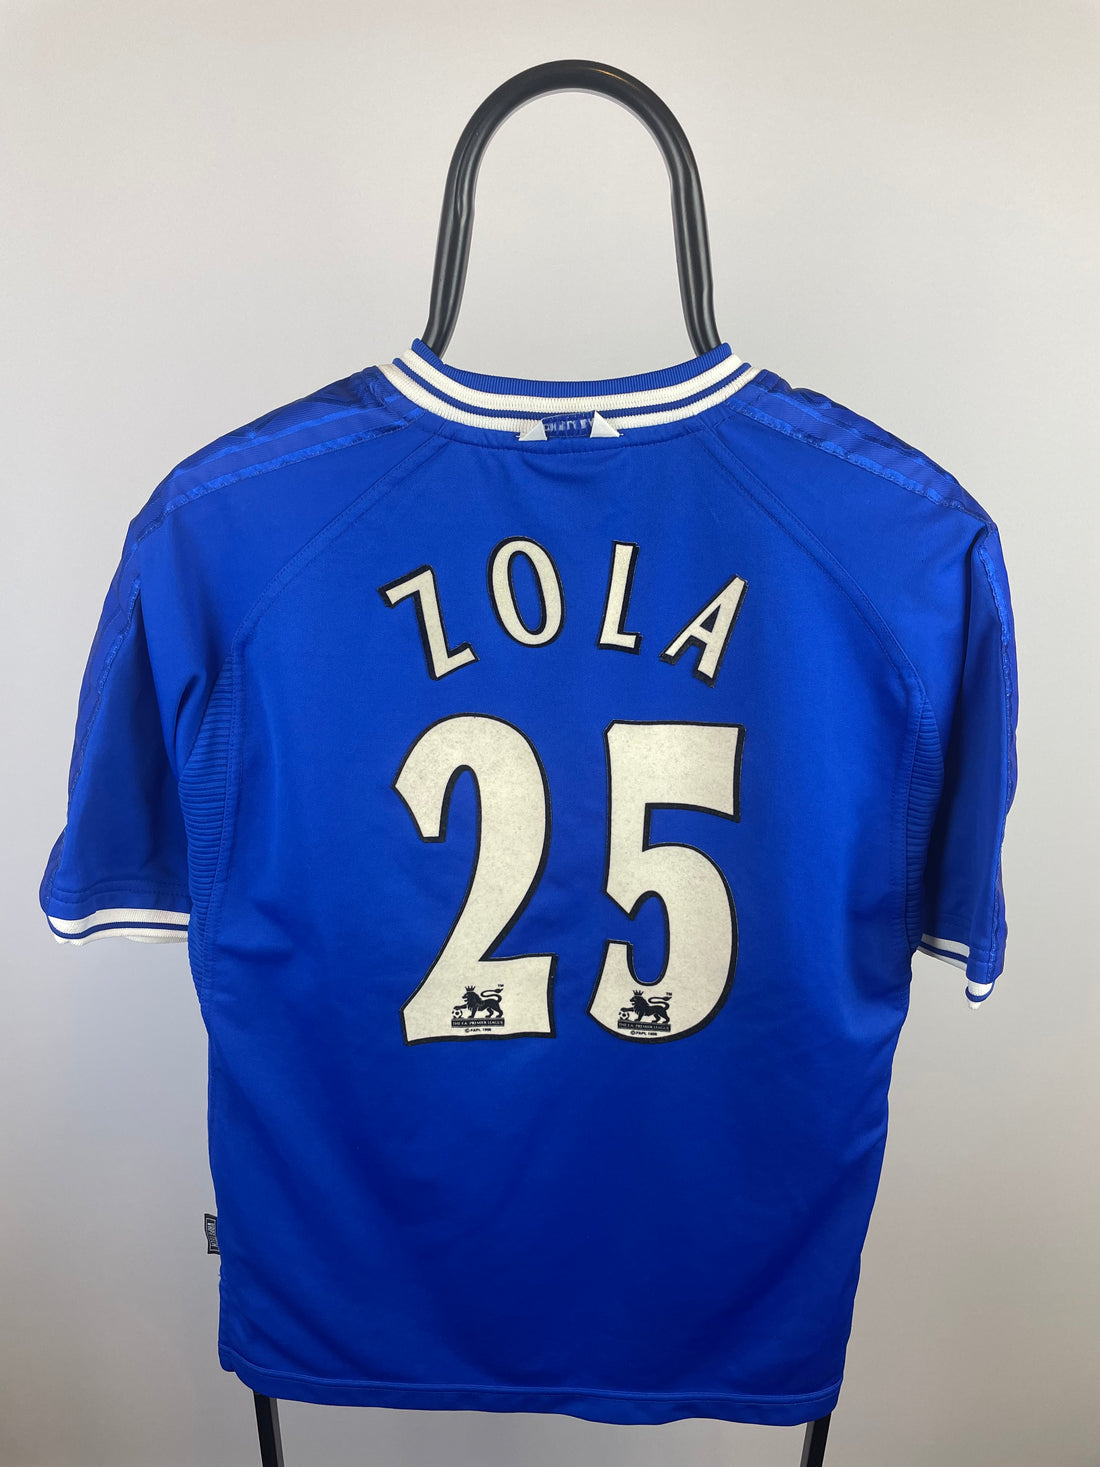 Gianfranco Zola Chelsea 99/01 hjemmebanetrøje - M